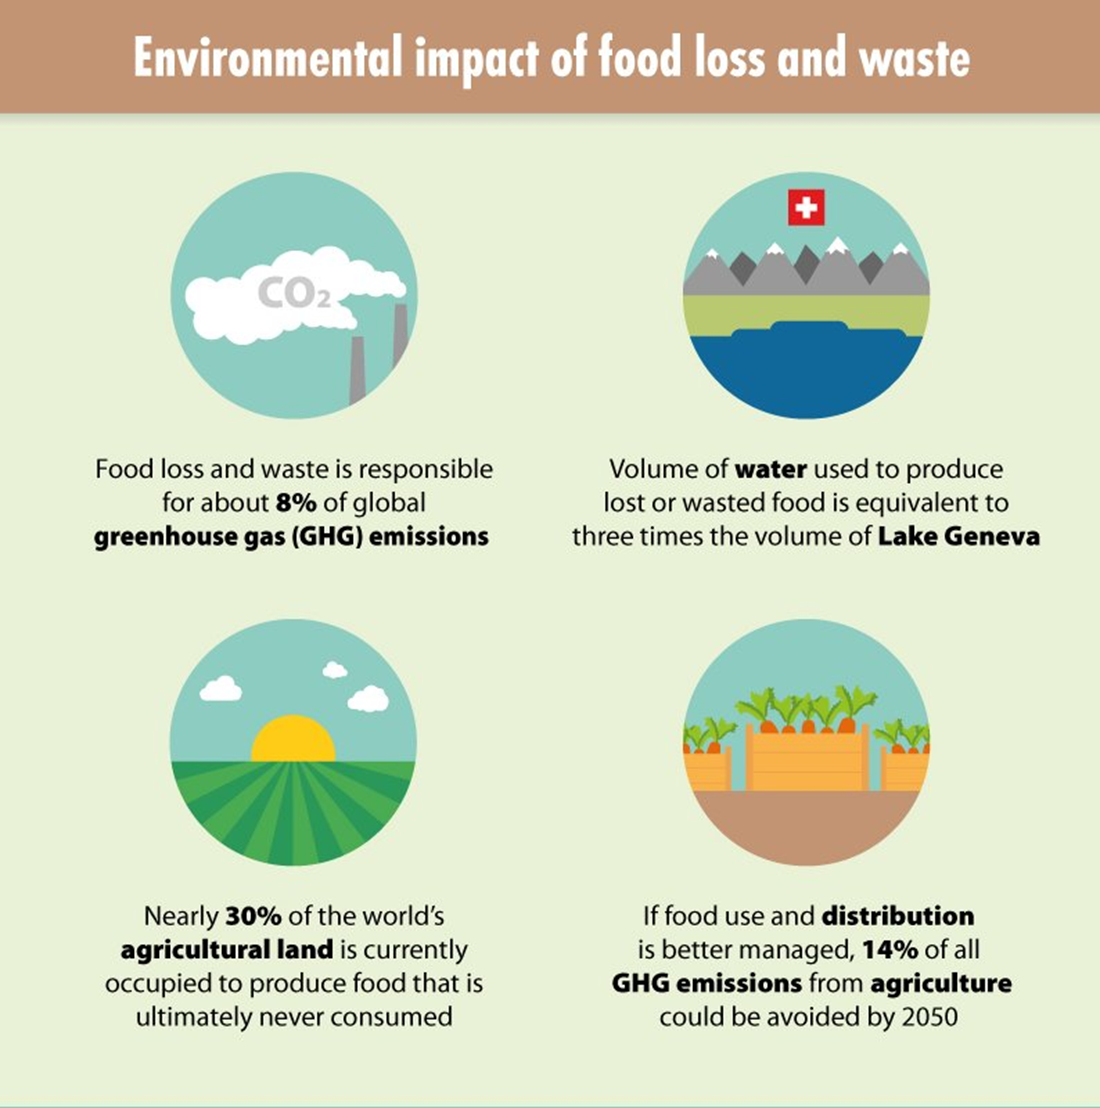 food waste graphic, Source: https://twitter.com/faostatistics/status/920548825374298112